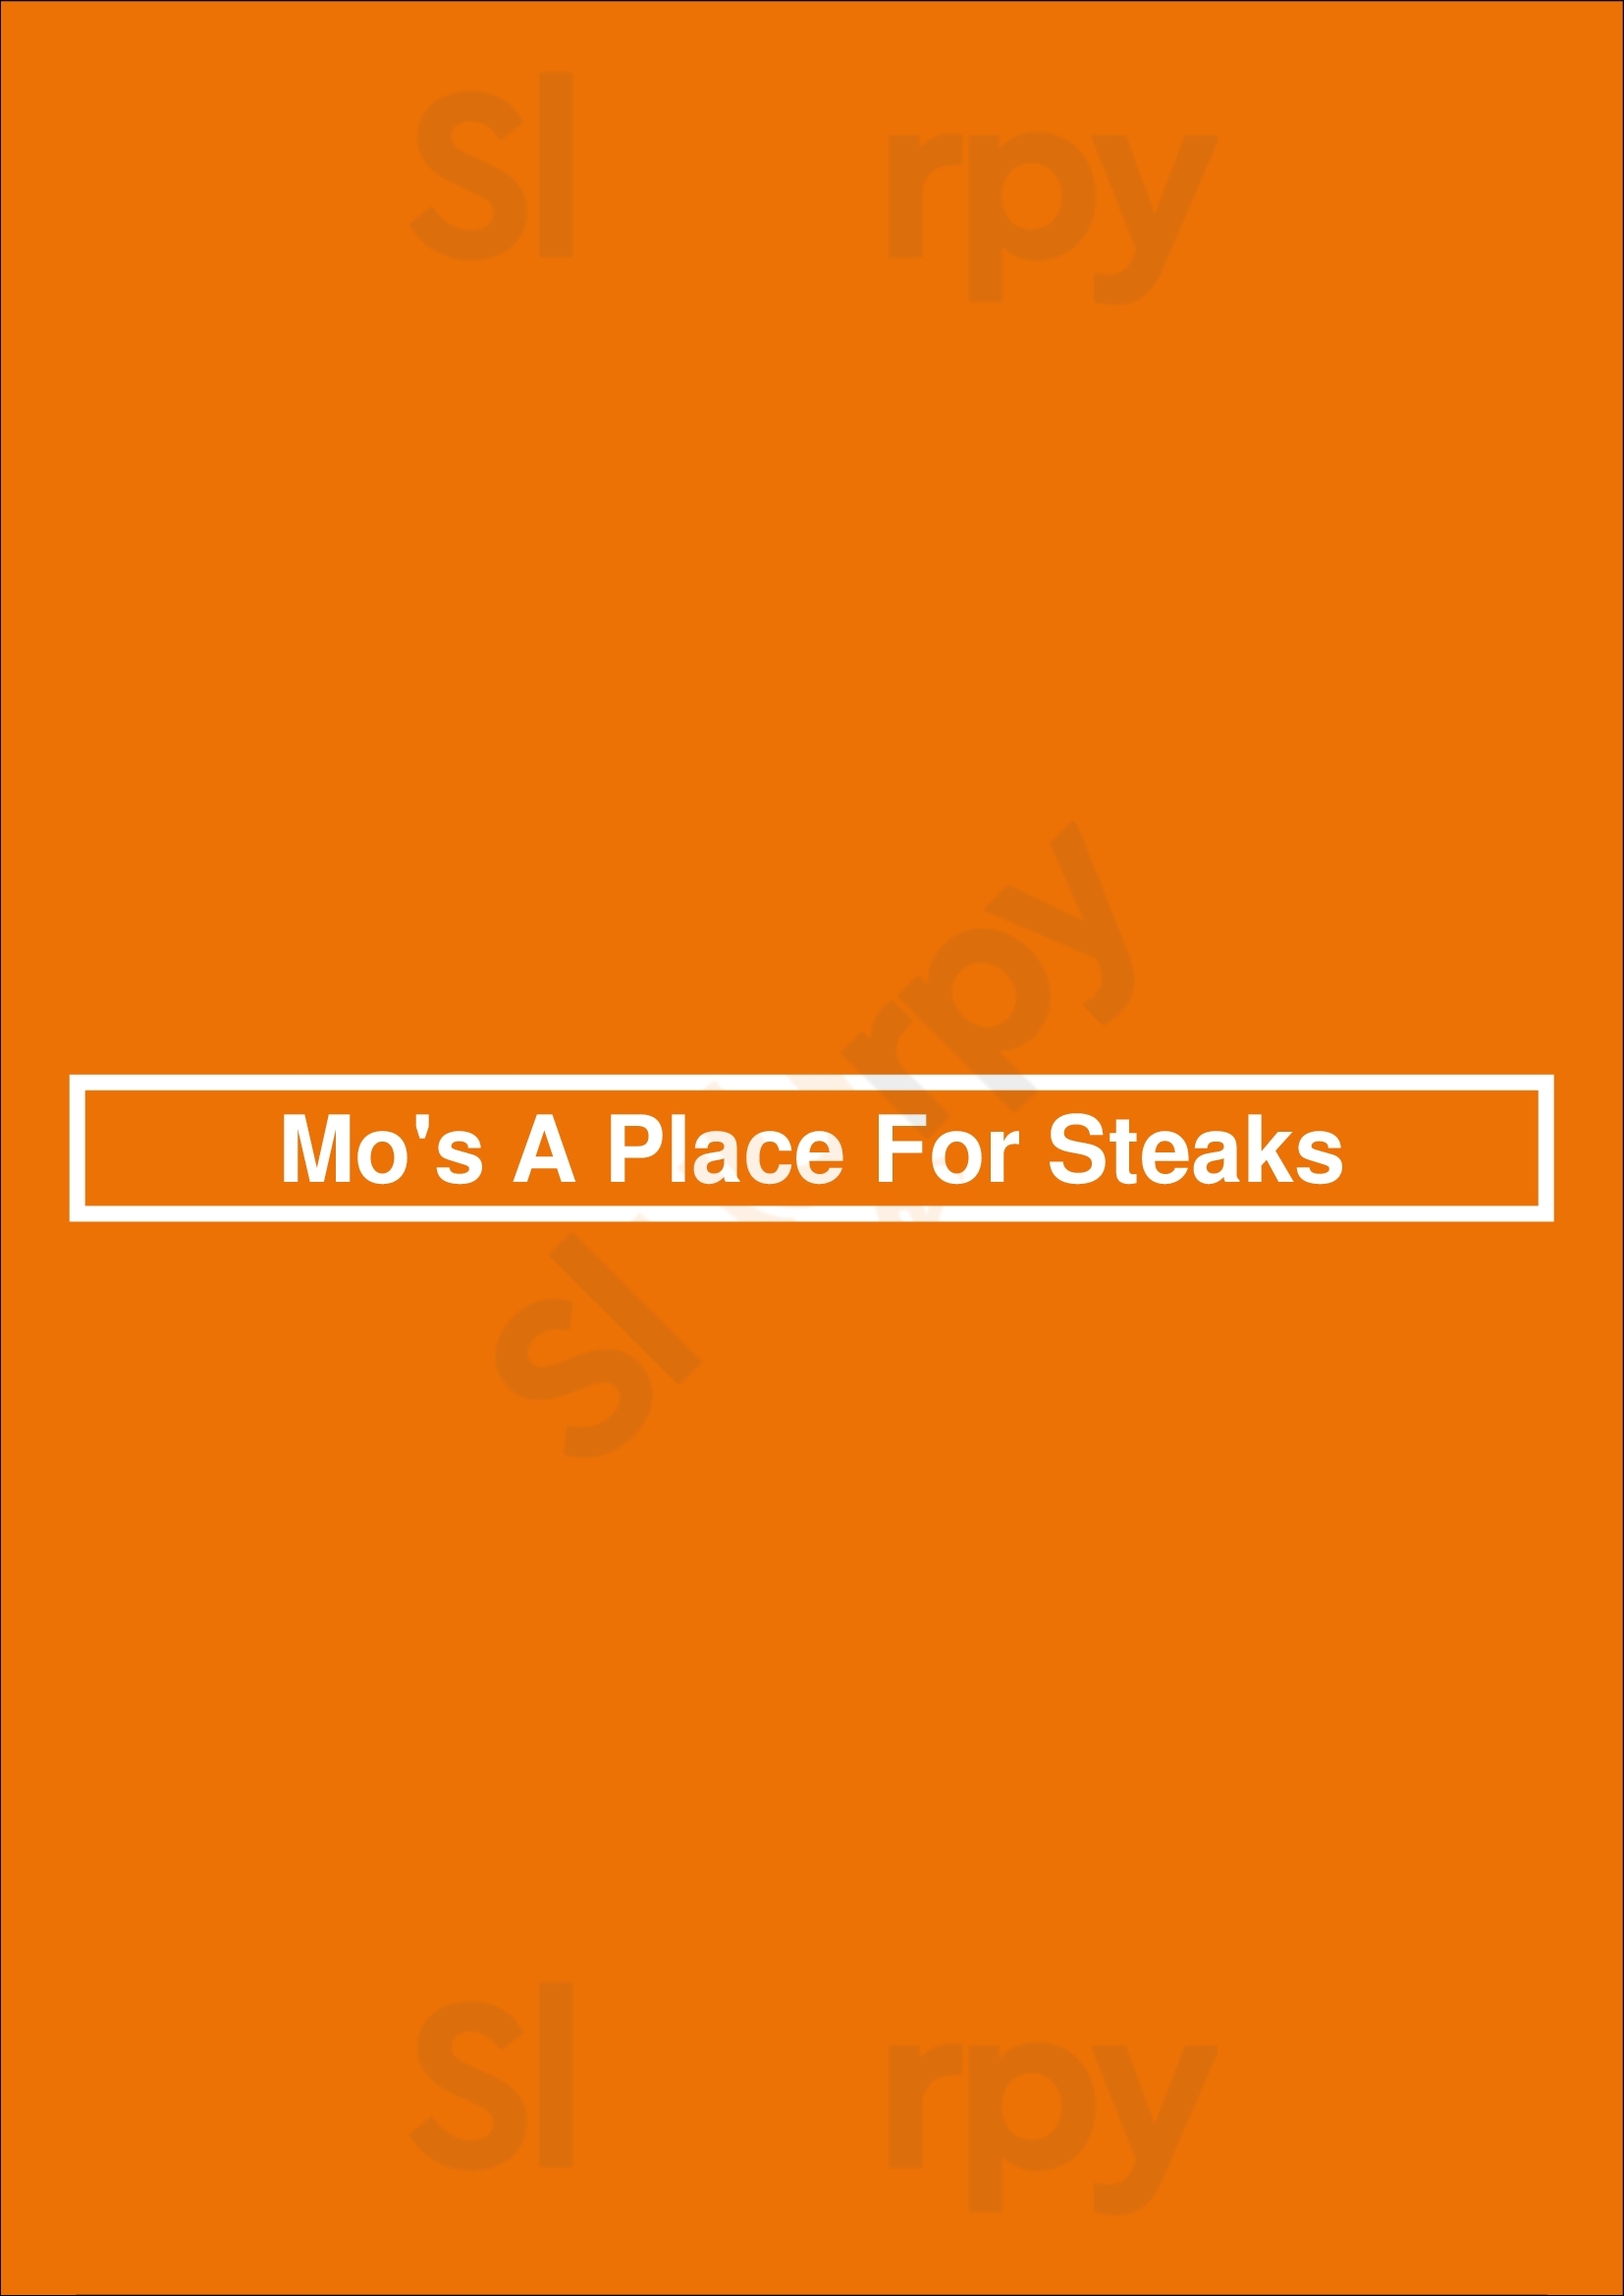 Mo's A Place For Steaks Milwaukee Menu - 1